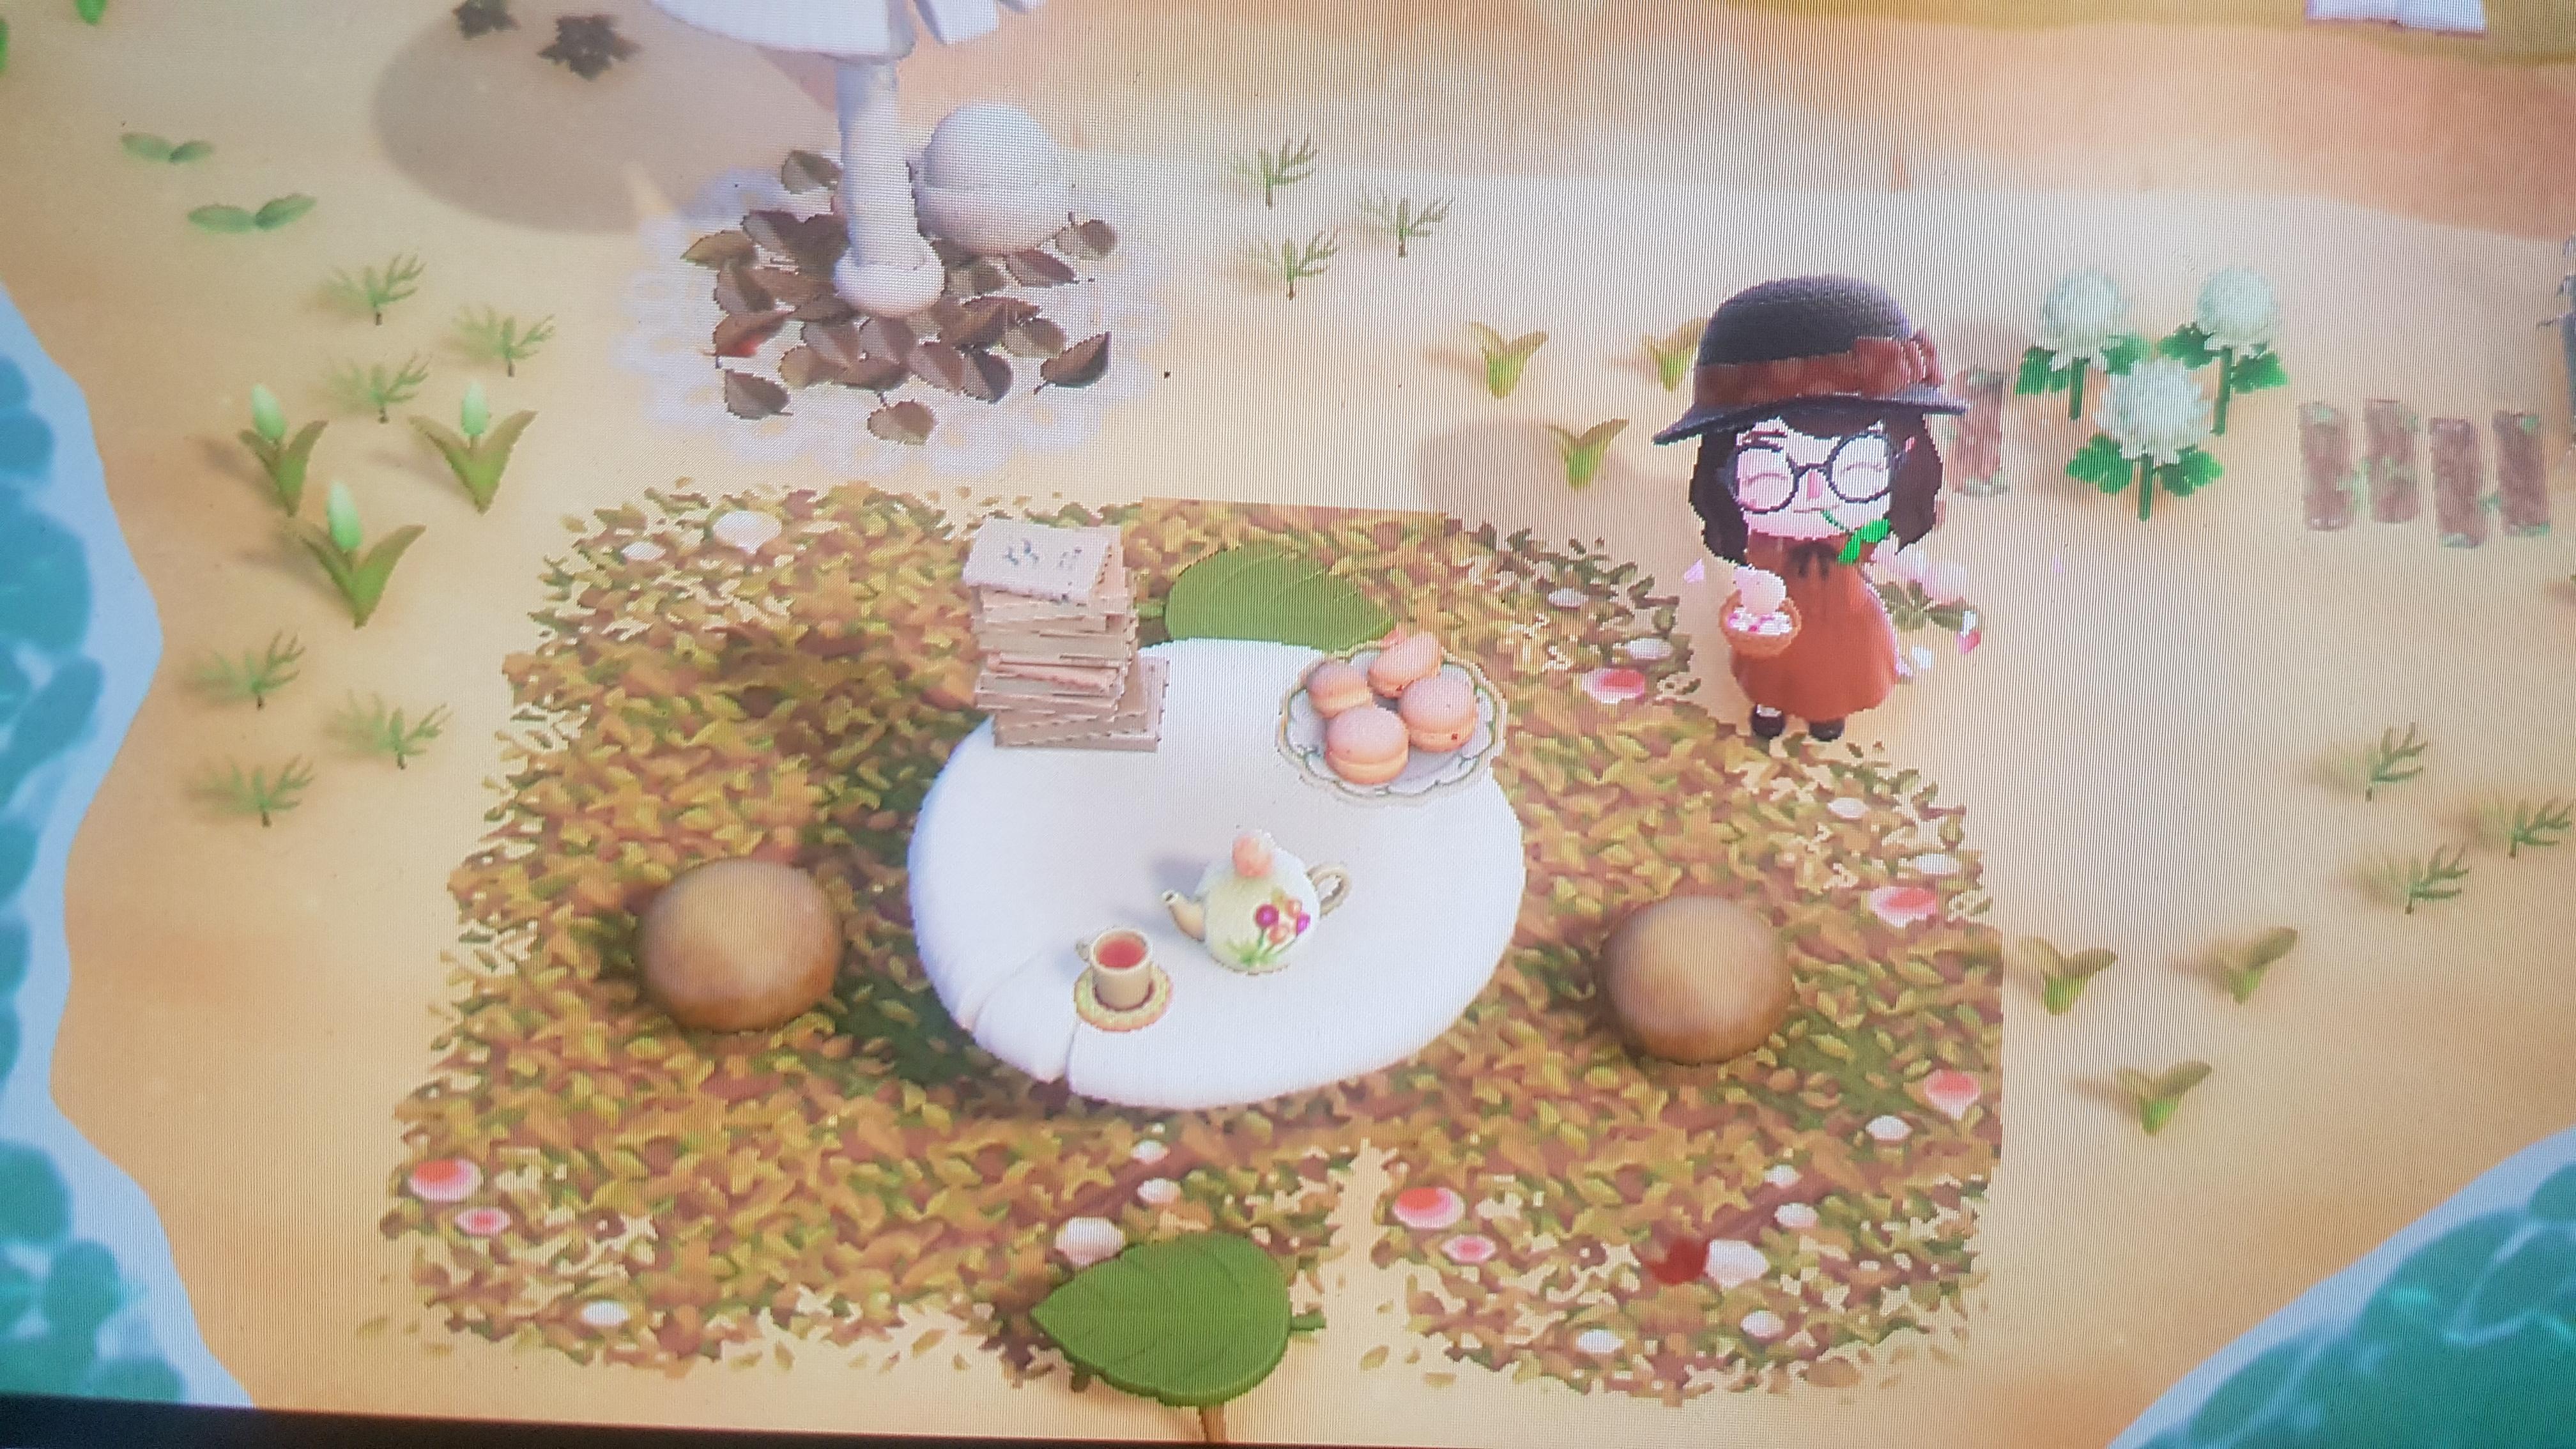 Animal Crossing found this cute path in a DA does